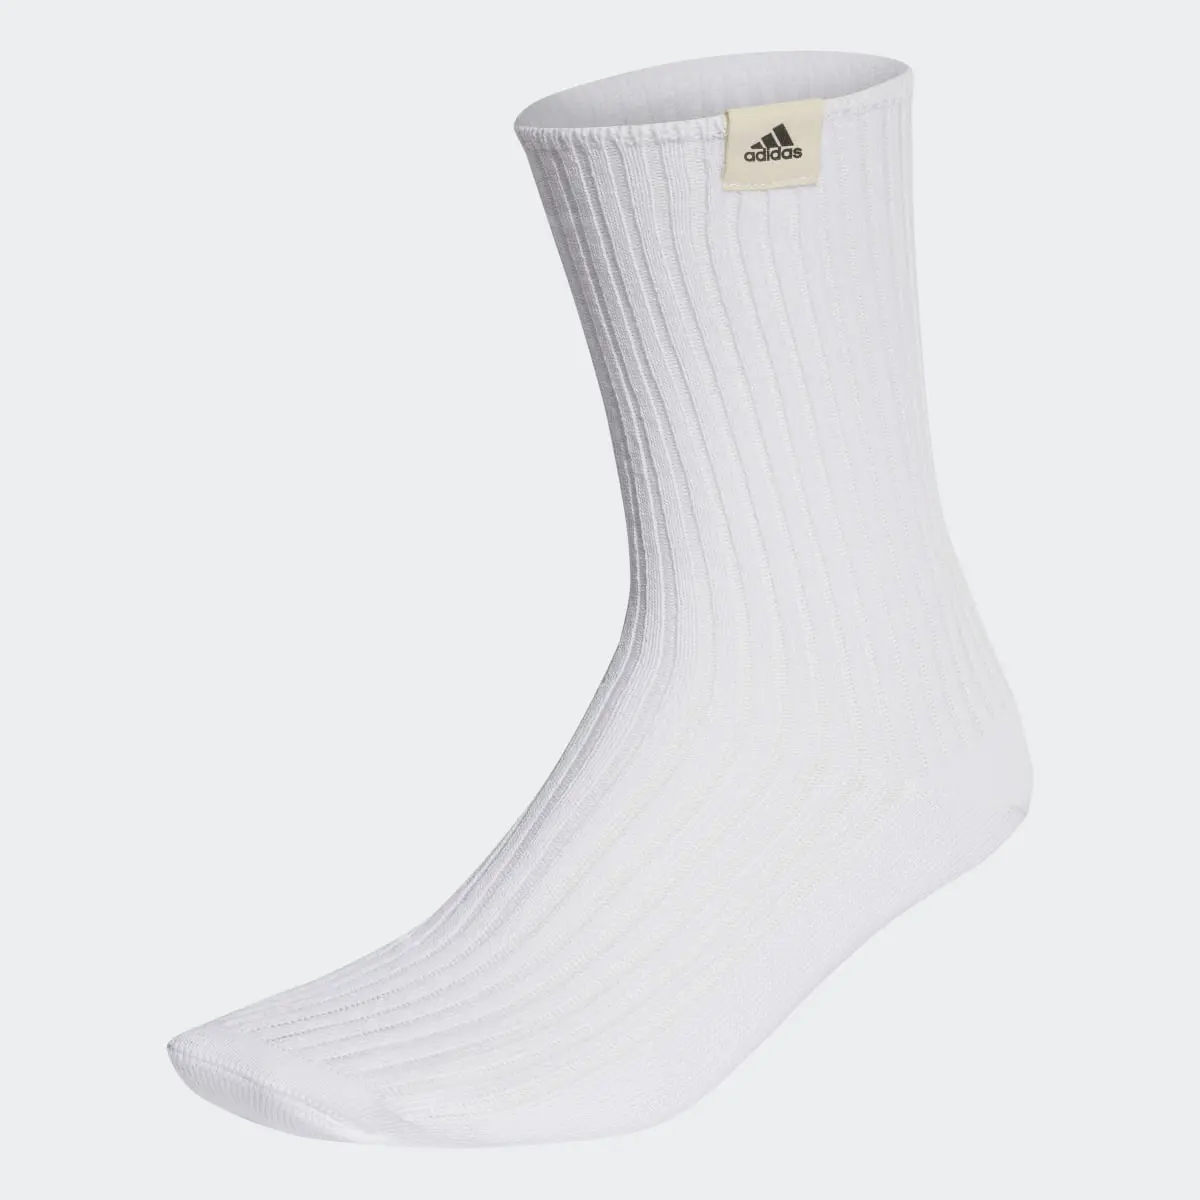 Adidas Best Label Socken, 1 Paar. 1